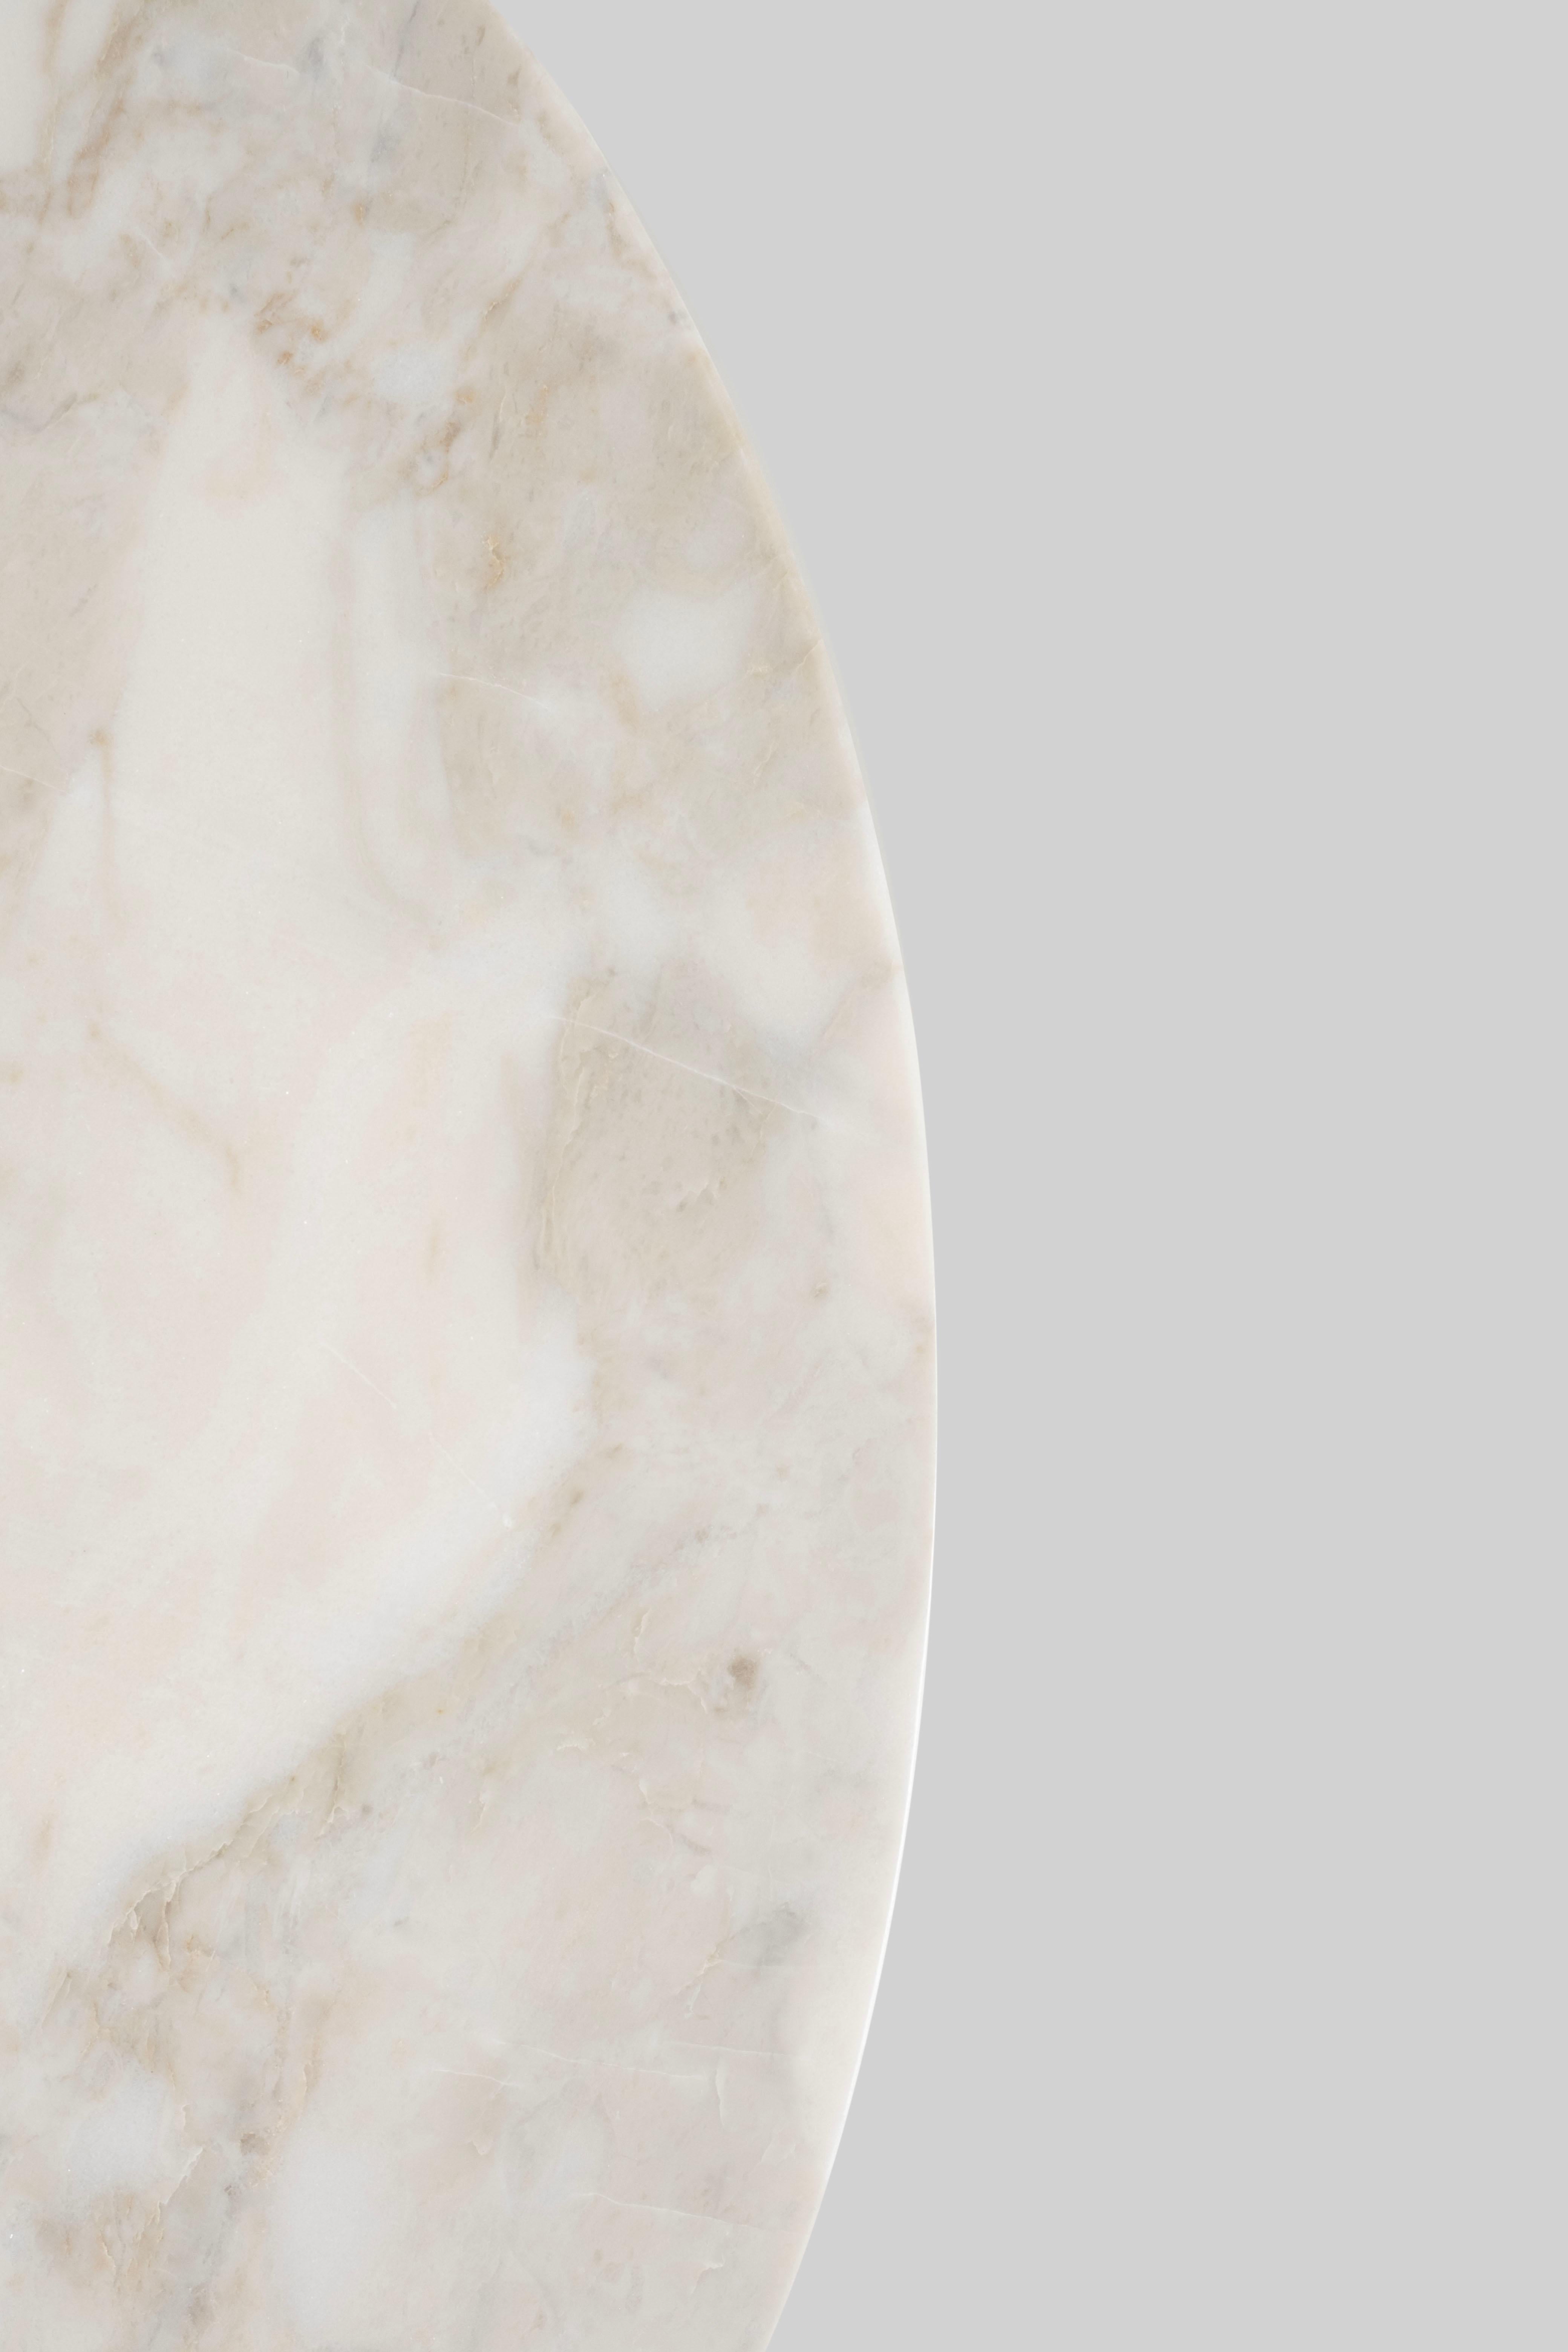 Modern Landscape Side Tables Calacatta Oro Marble Handmade Portugal Greenapple For Sale 6